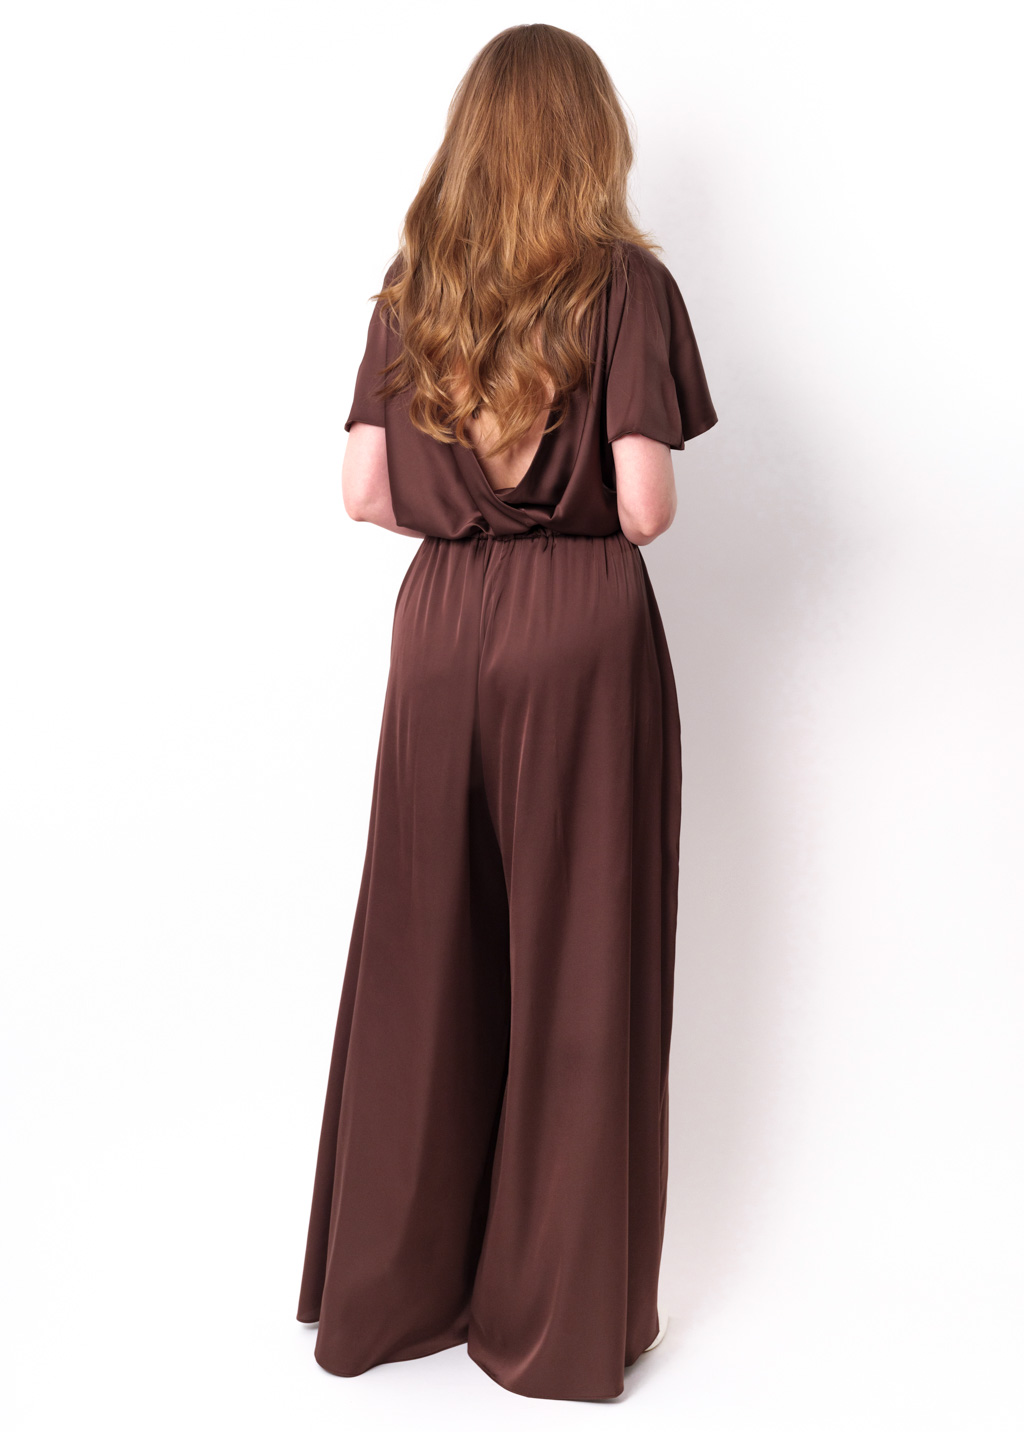 Choсolate brown silk jumpsuit